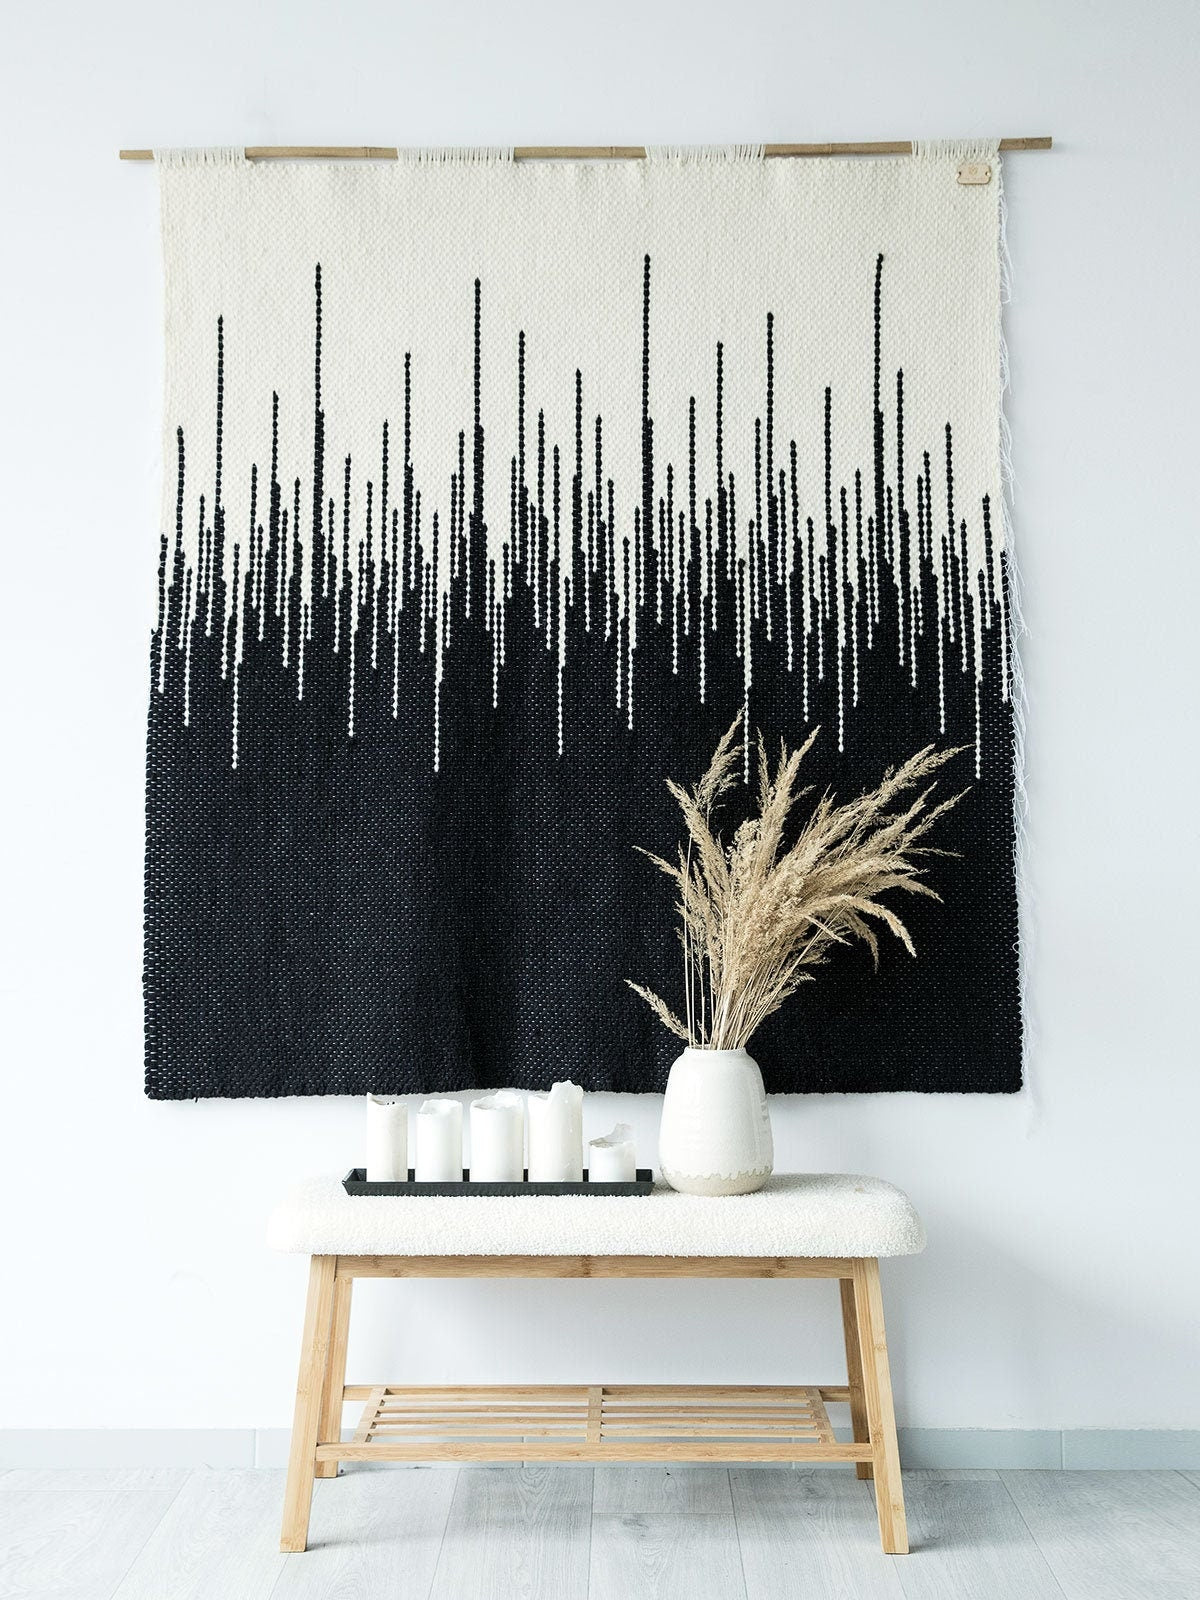 Zebra - Wool Woven Wall Hanging